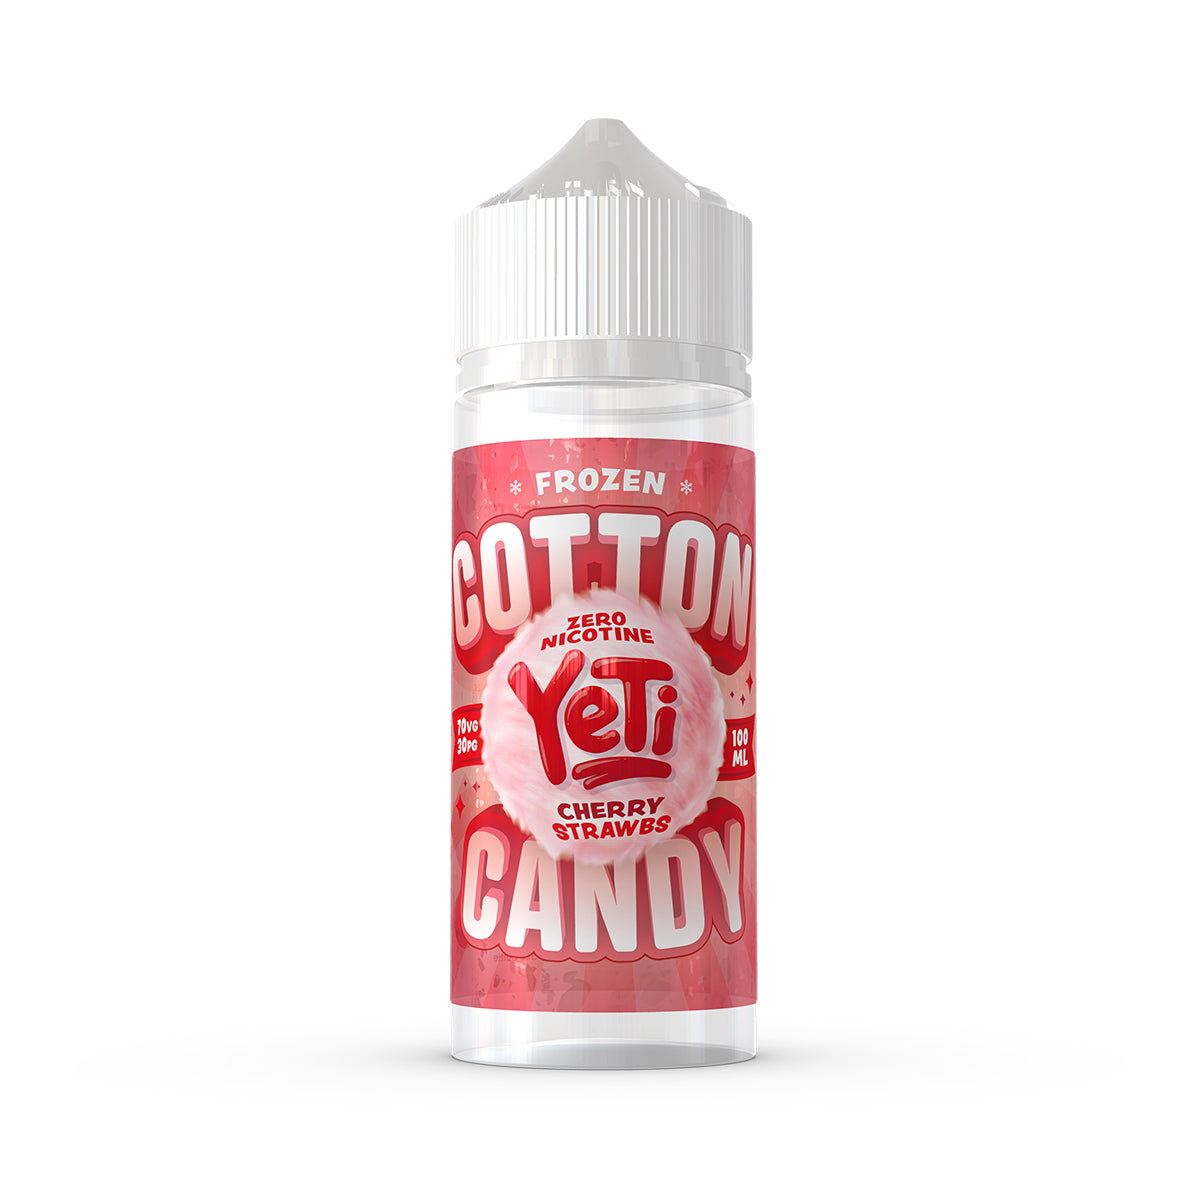 YeTi Cotton Candy - Cherry Strawbs 100ml